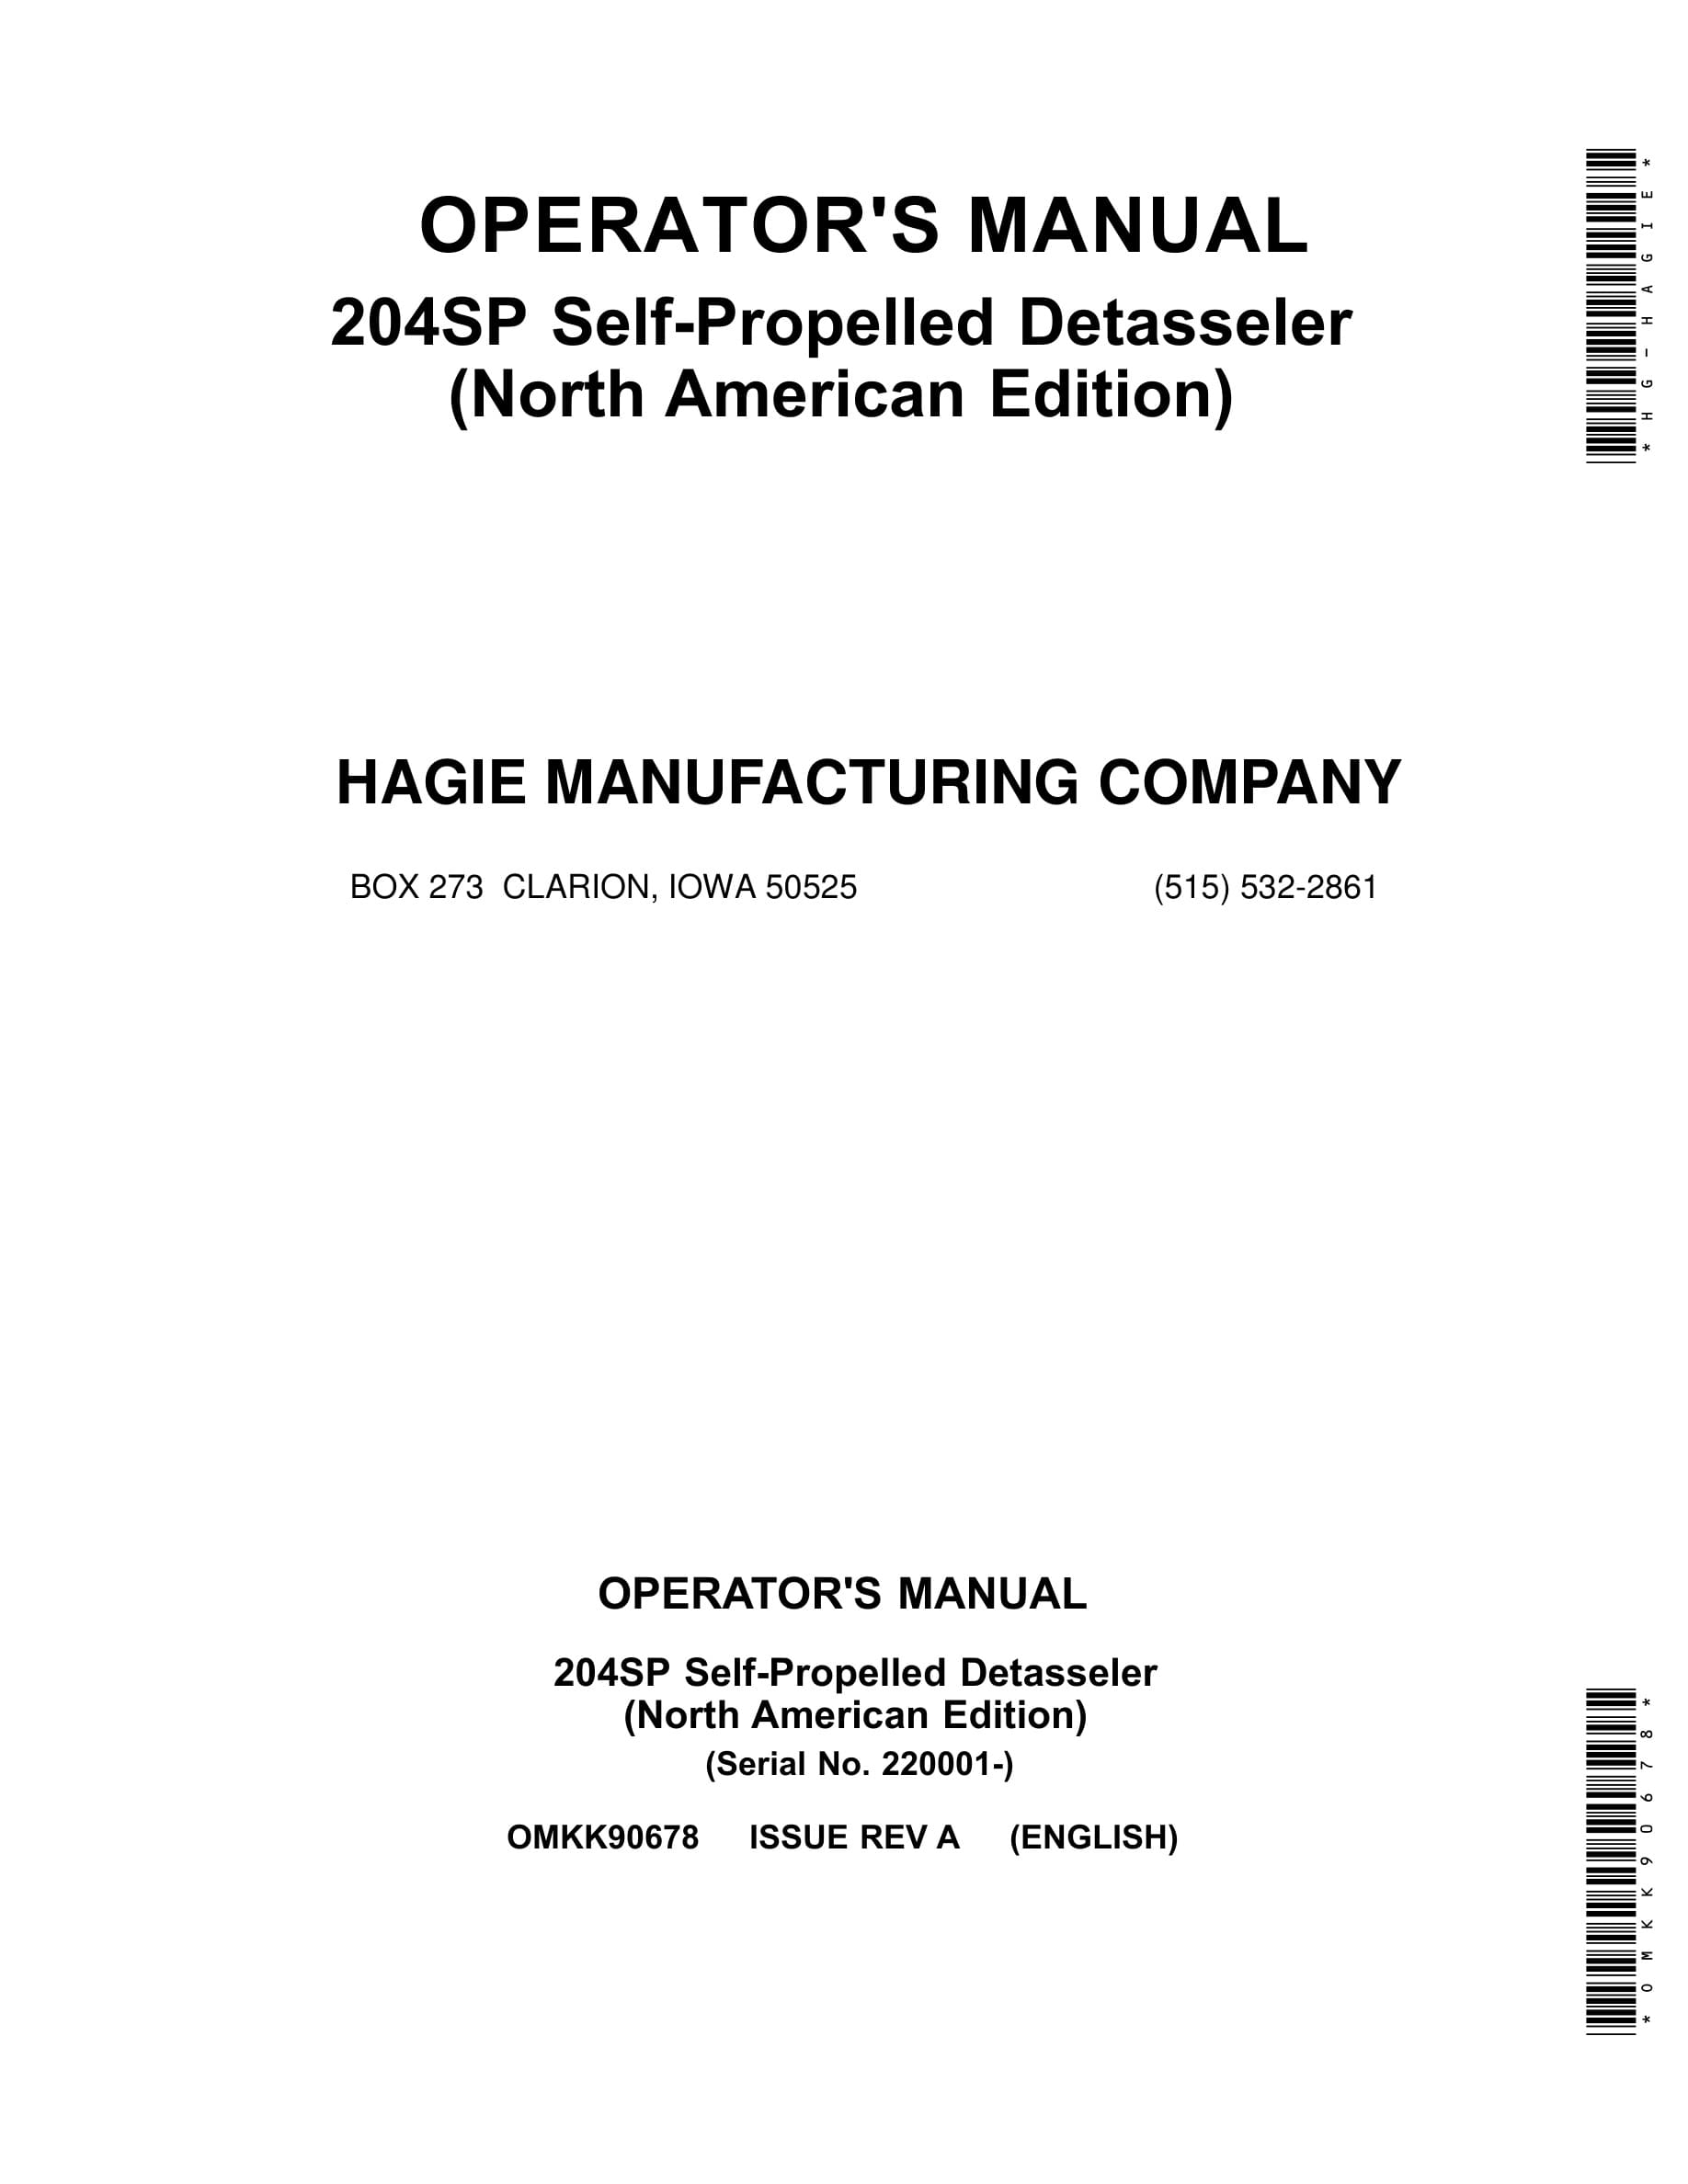 John Deere 204SP Self-Propelled Detasseler Operator Manual OMKK90678-1